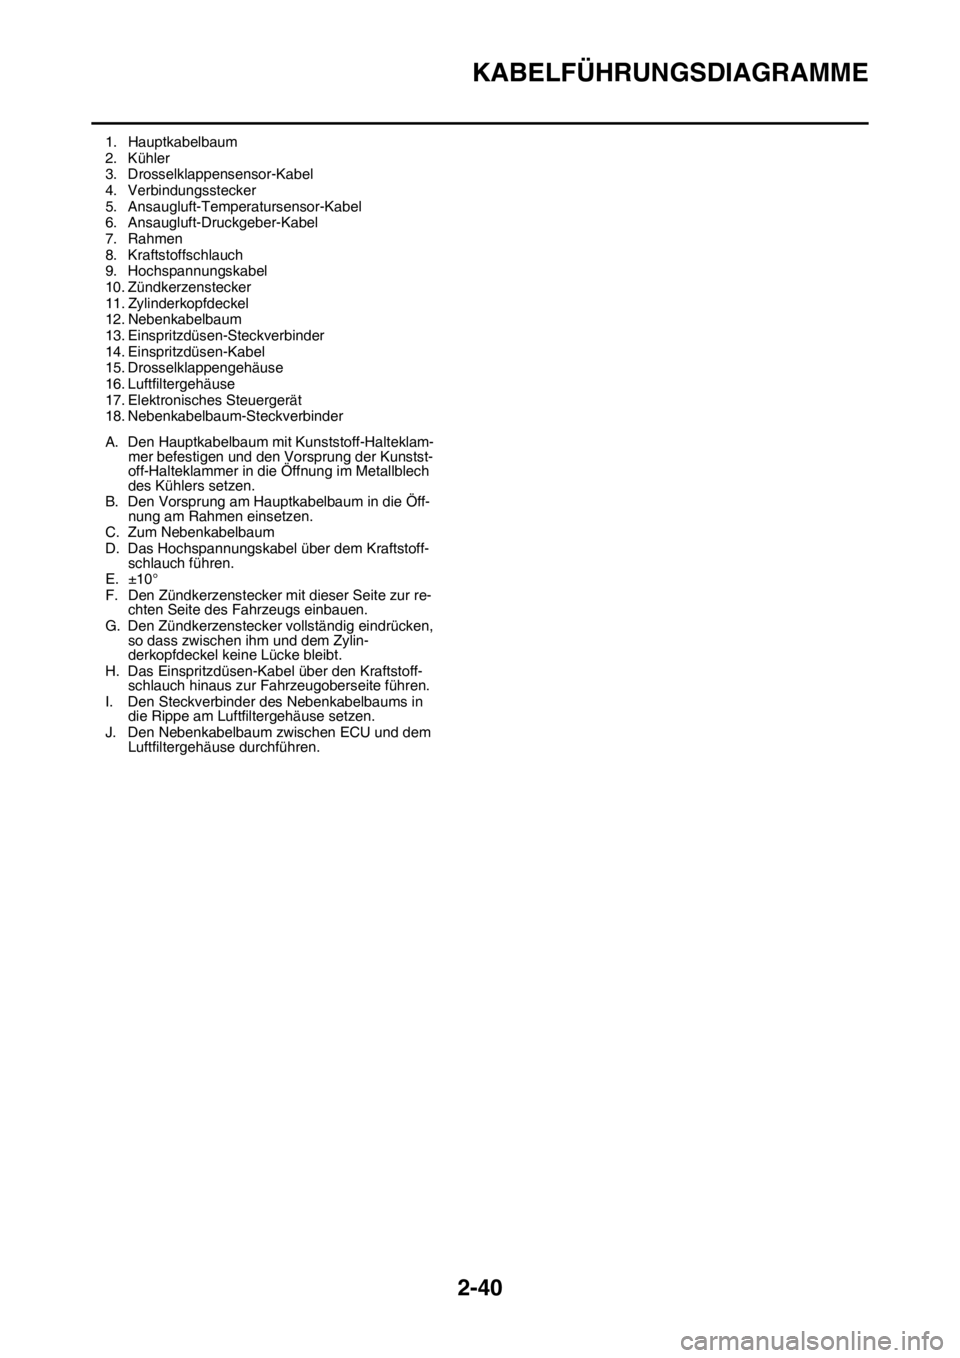 YAMAHA YZ250F 2014  Betriebsanleitungen (in German) KABELFÜHRUNGSDIAGRAMME
2-40
1. Hauptkabelbaum
2. Kühler
3. Drosselklappensensor-Kabel
4. Verbindungsstecker
5. Ansaugluft-Temperatursensor-Kabel
6. Ansaugluft-Druckgeber-Kabel
7. Rahmen
8. Kraftstof